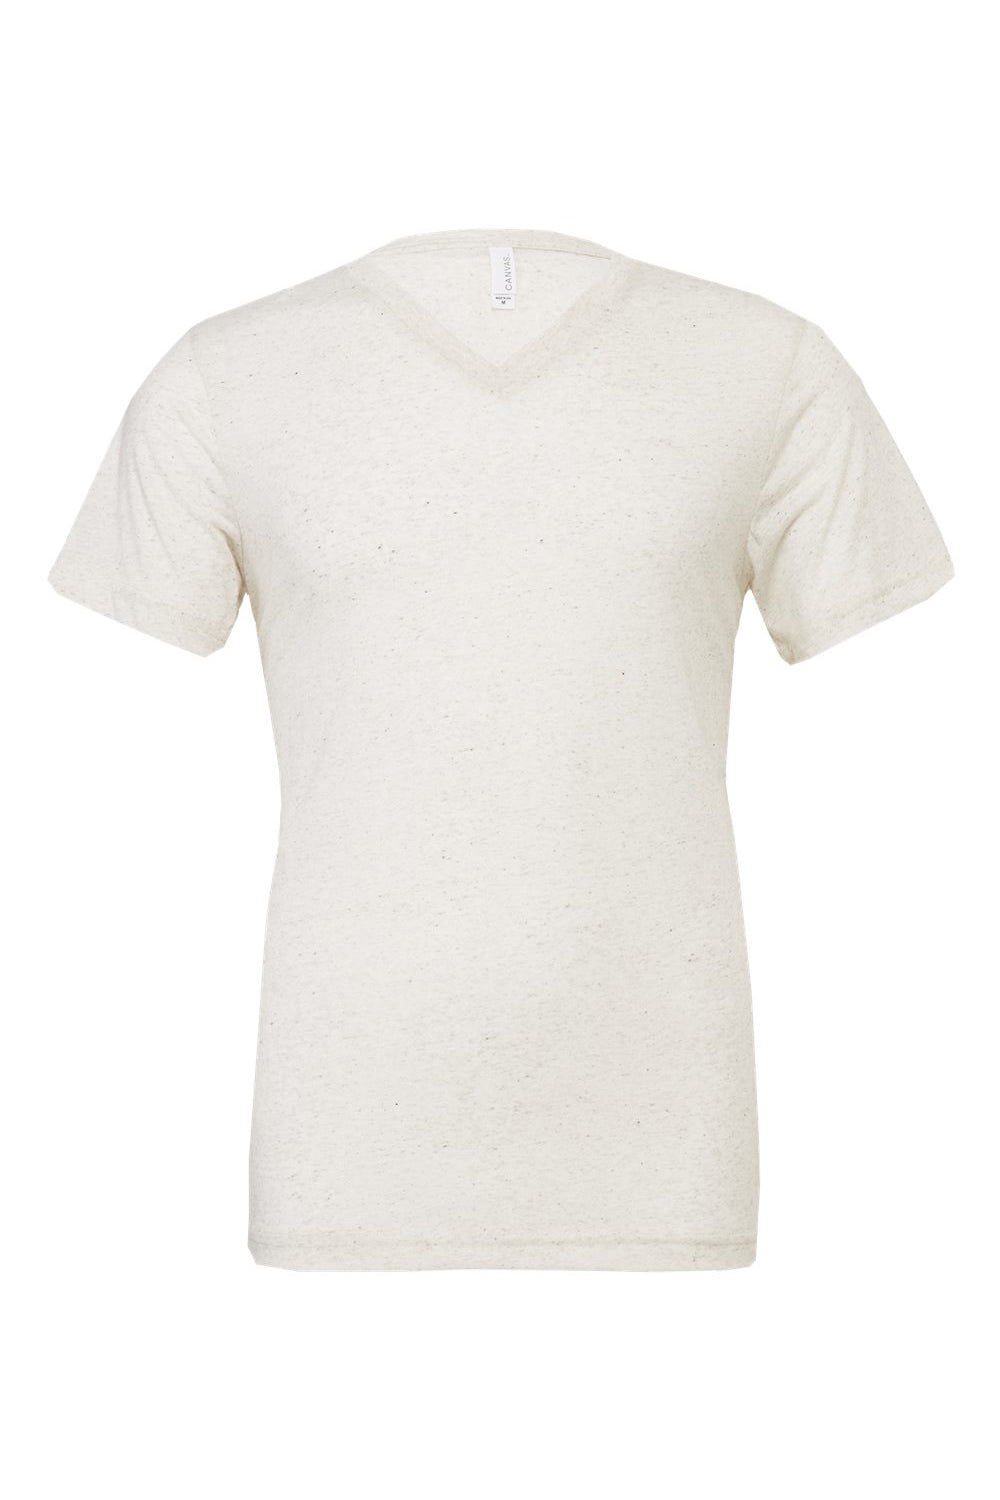 Bella + Canvas BC3415/3415C/3415 Mens Short Sleeve V-Neck T-Shirt Oatmeal Flat Front